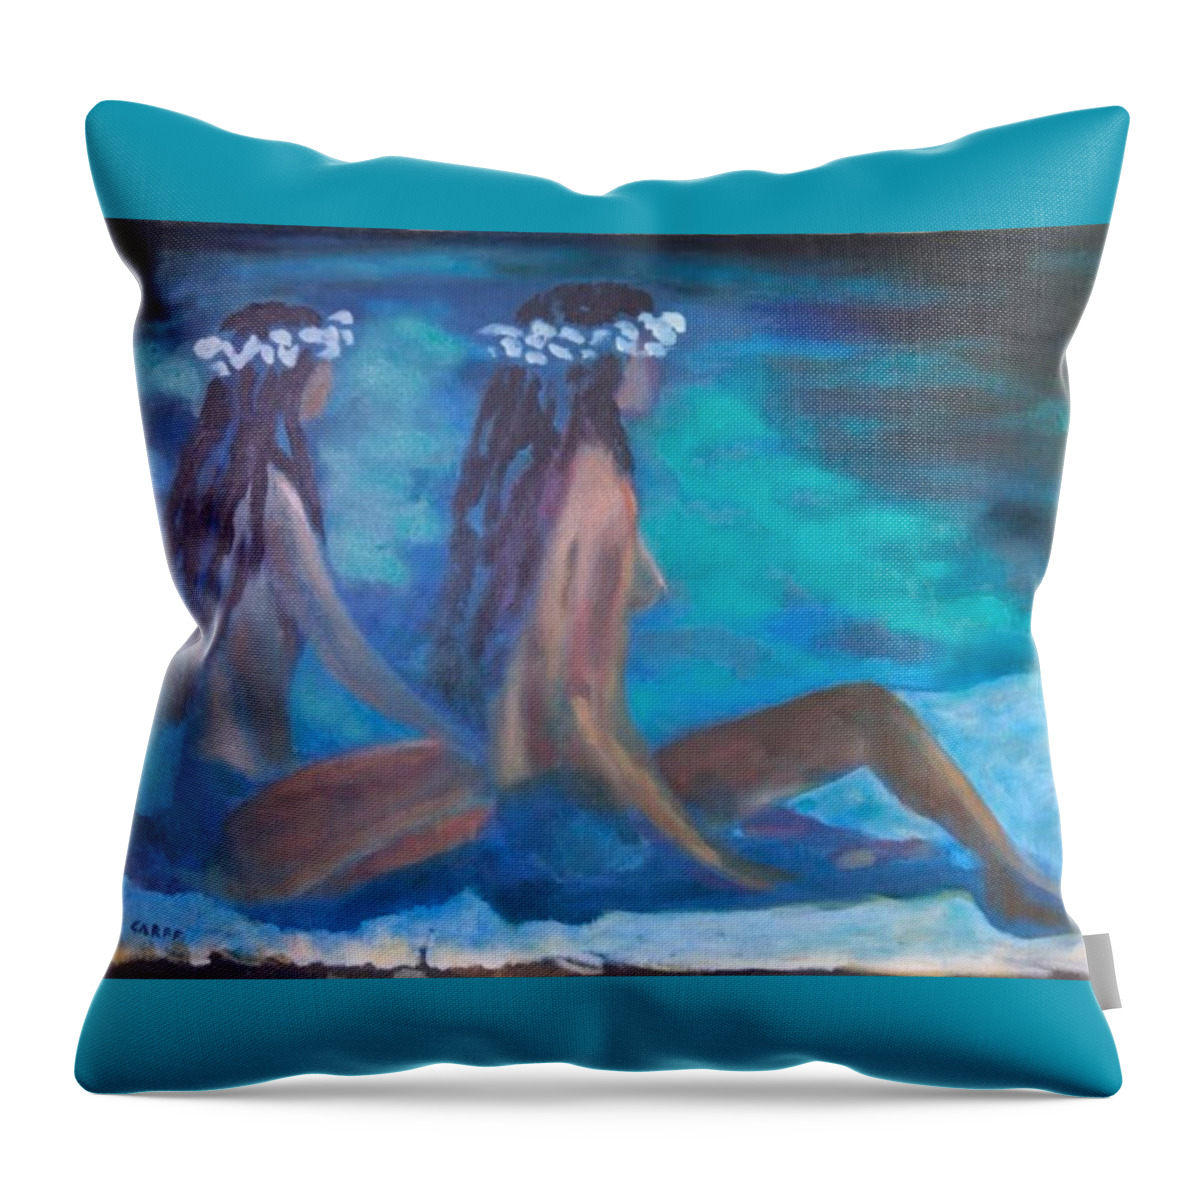 Hawaiian Girls Throw Pillow featuring the painting Le Hawaiane by Enrico Garff